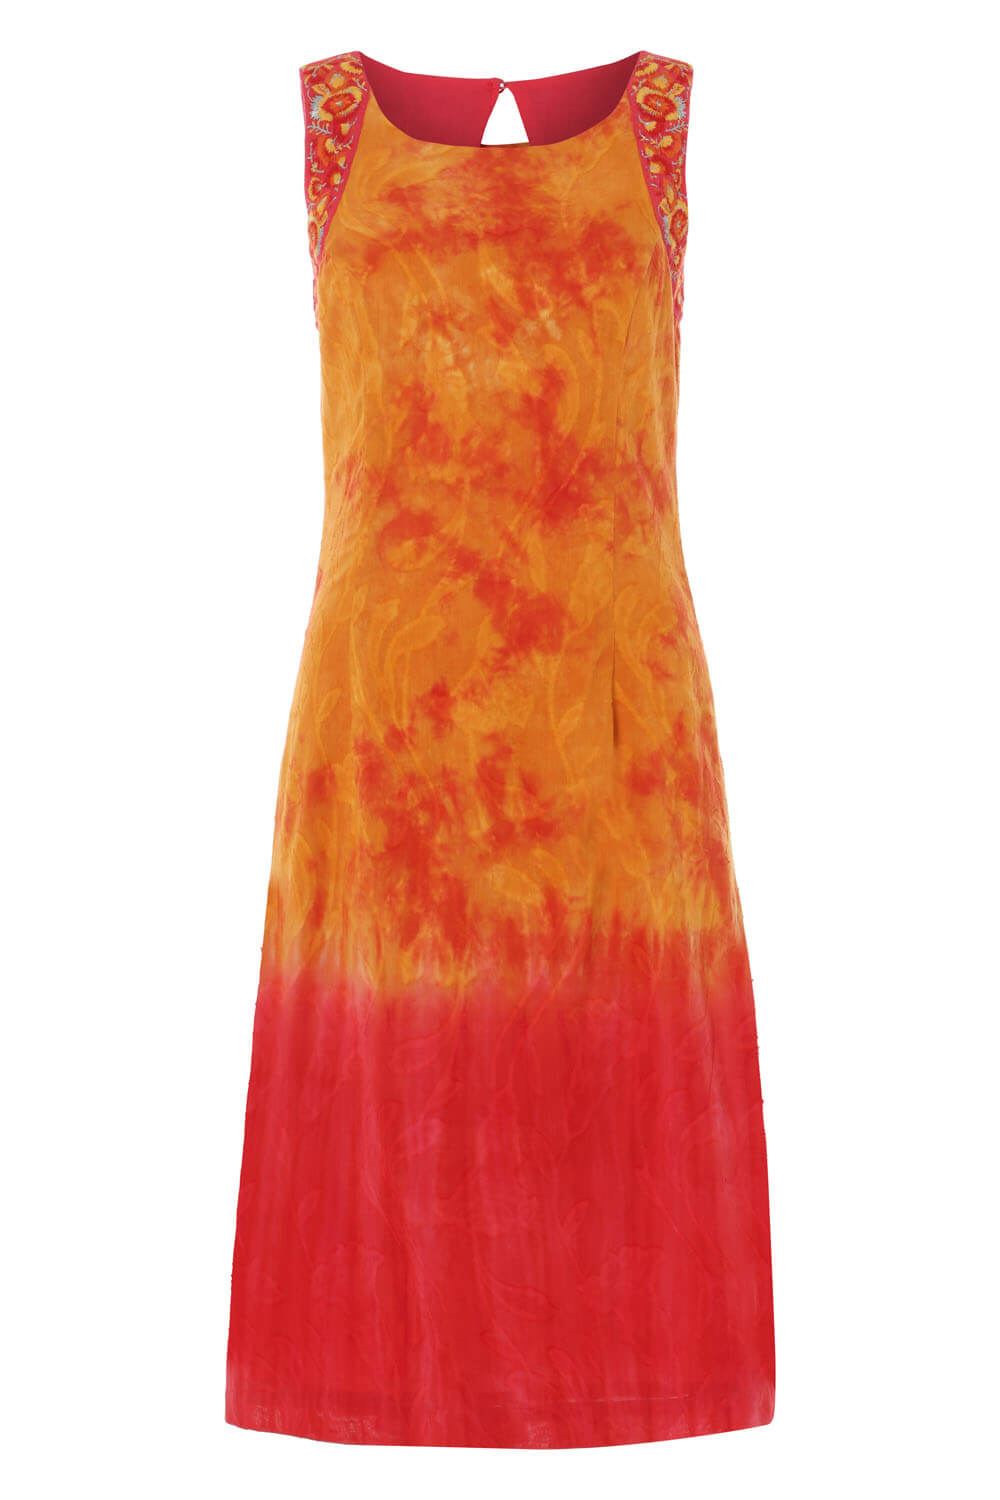 ORANGE Embroidered Tie Dye Shift Dress, Image 5 of 5